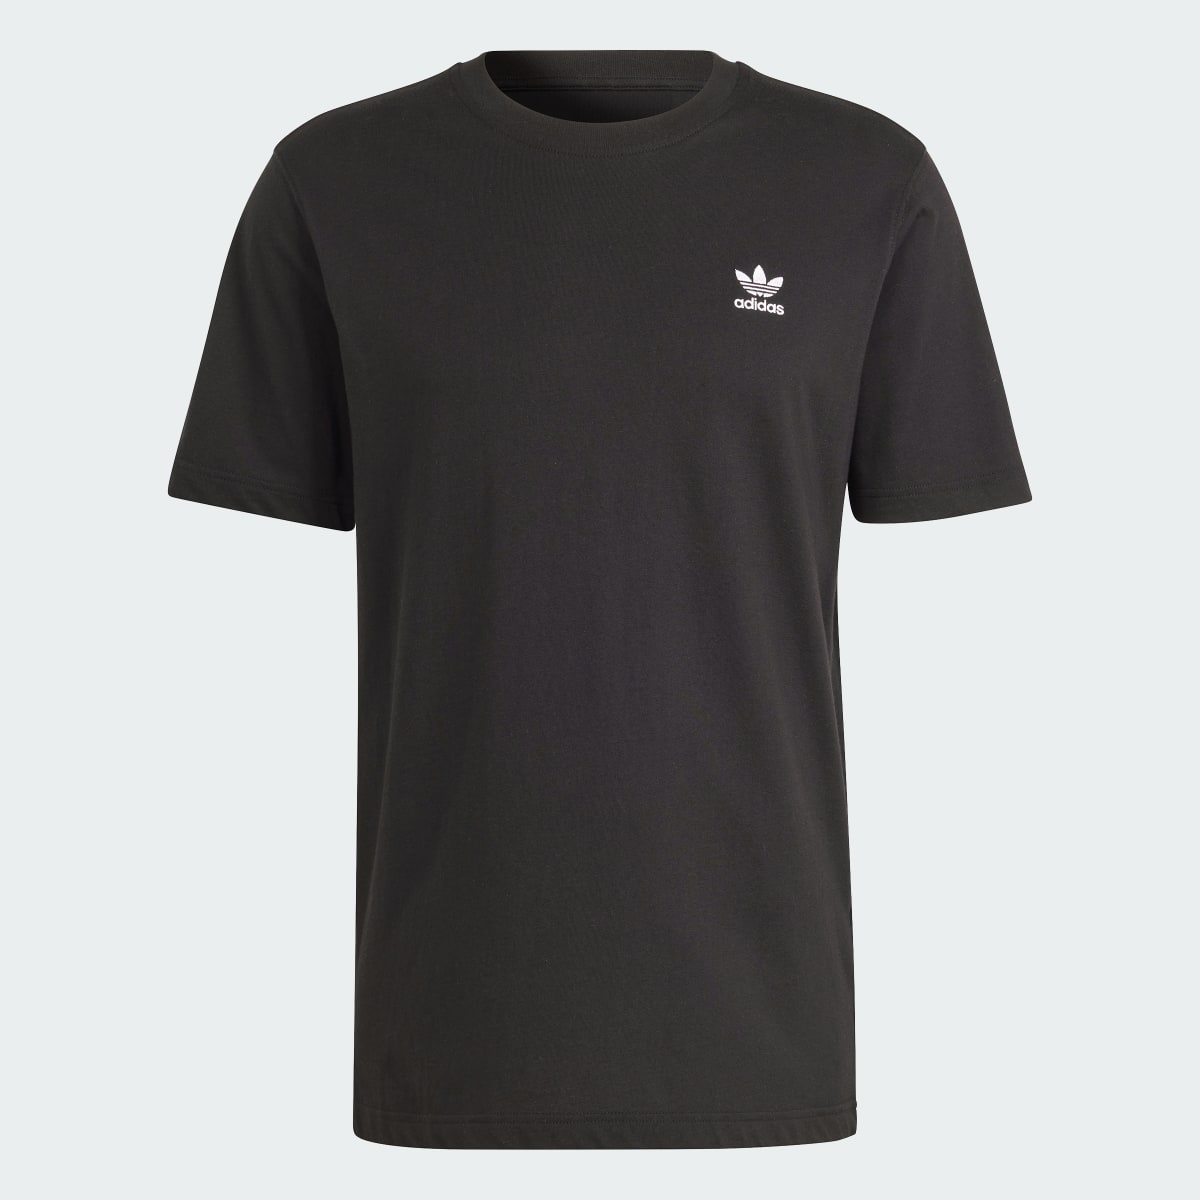 Adidas Trefoil Essentials T-Shirt. 5